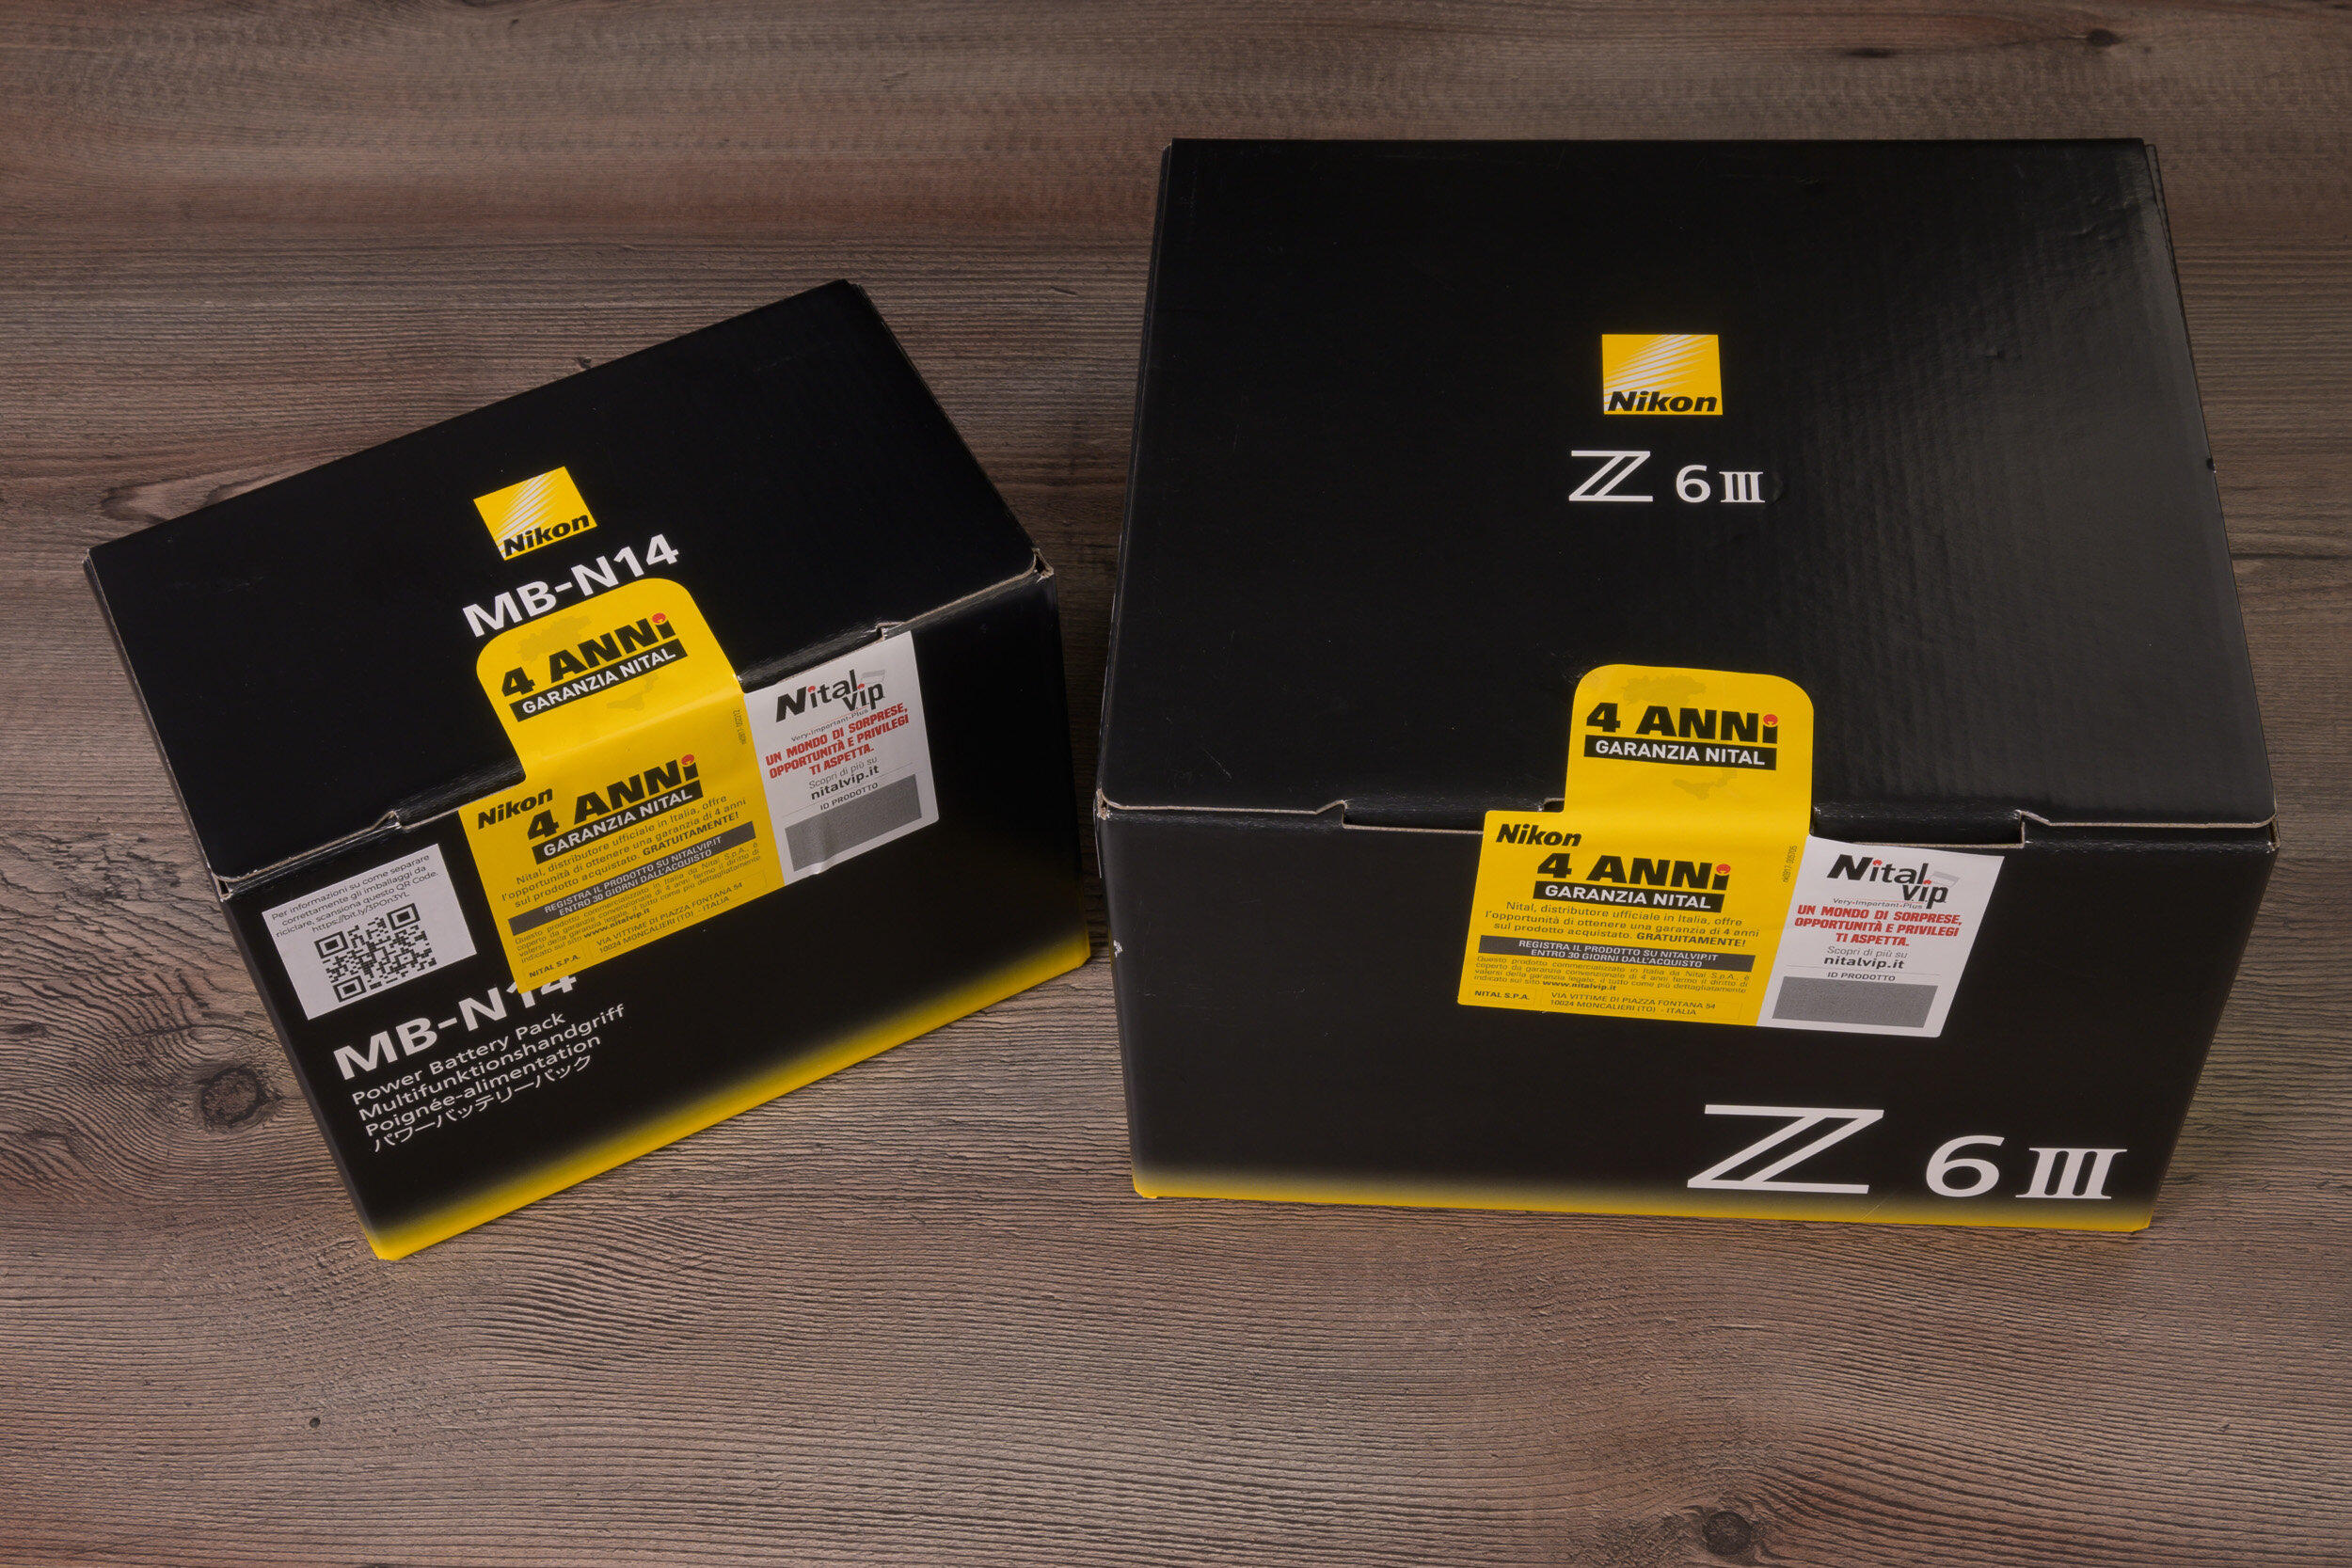 Nikon Z6 III : unboxing e prime impressioni